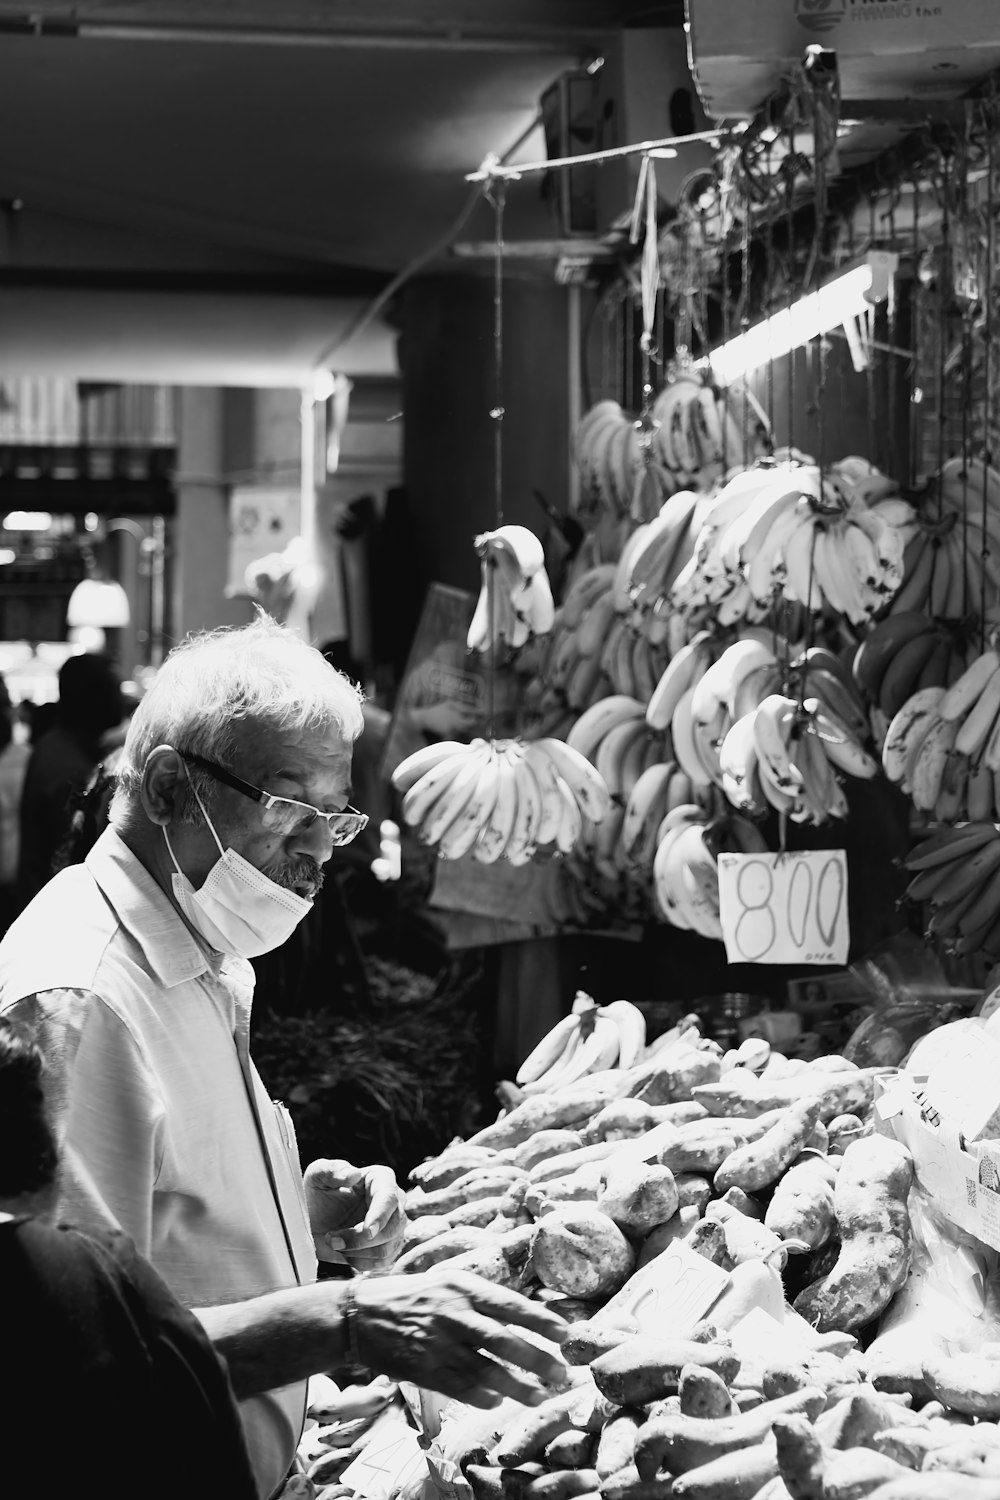 a person selling bananas at a market